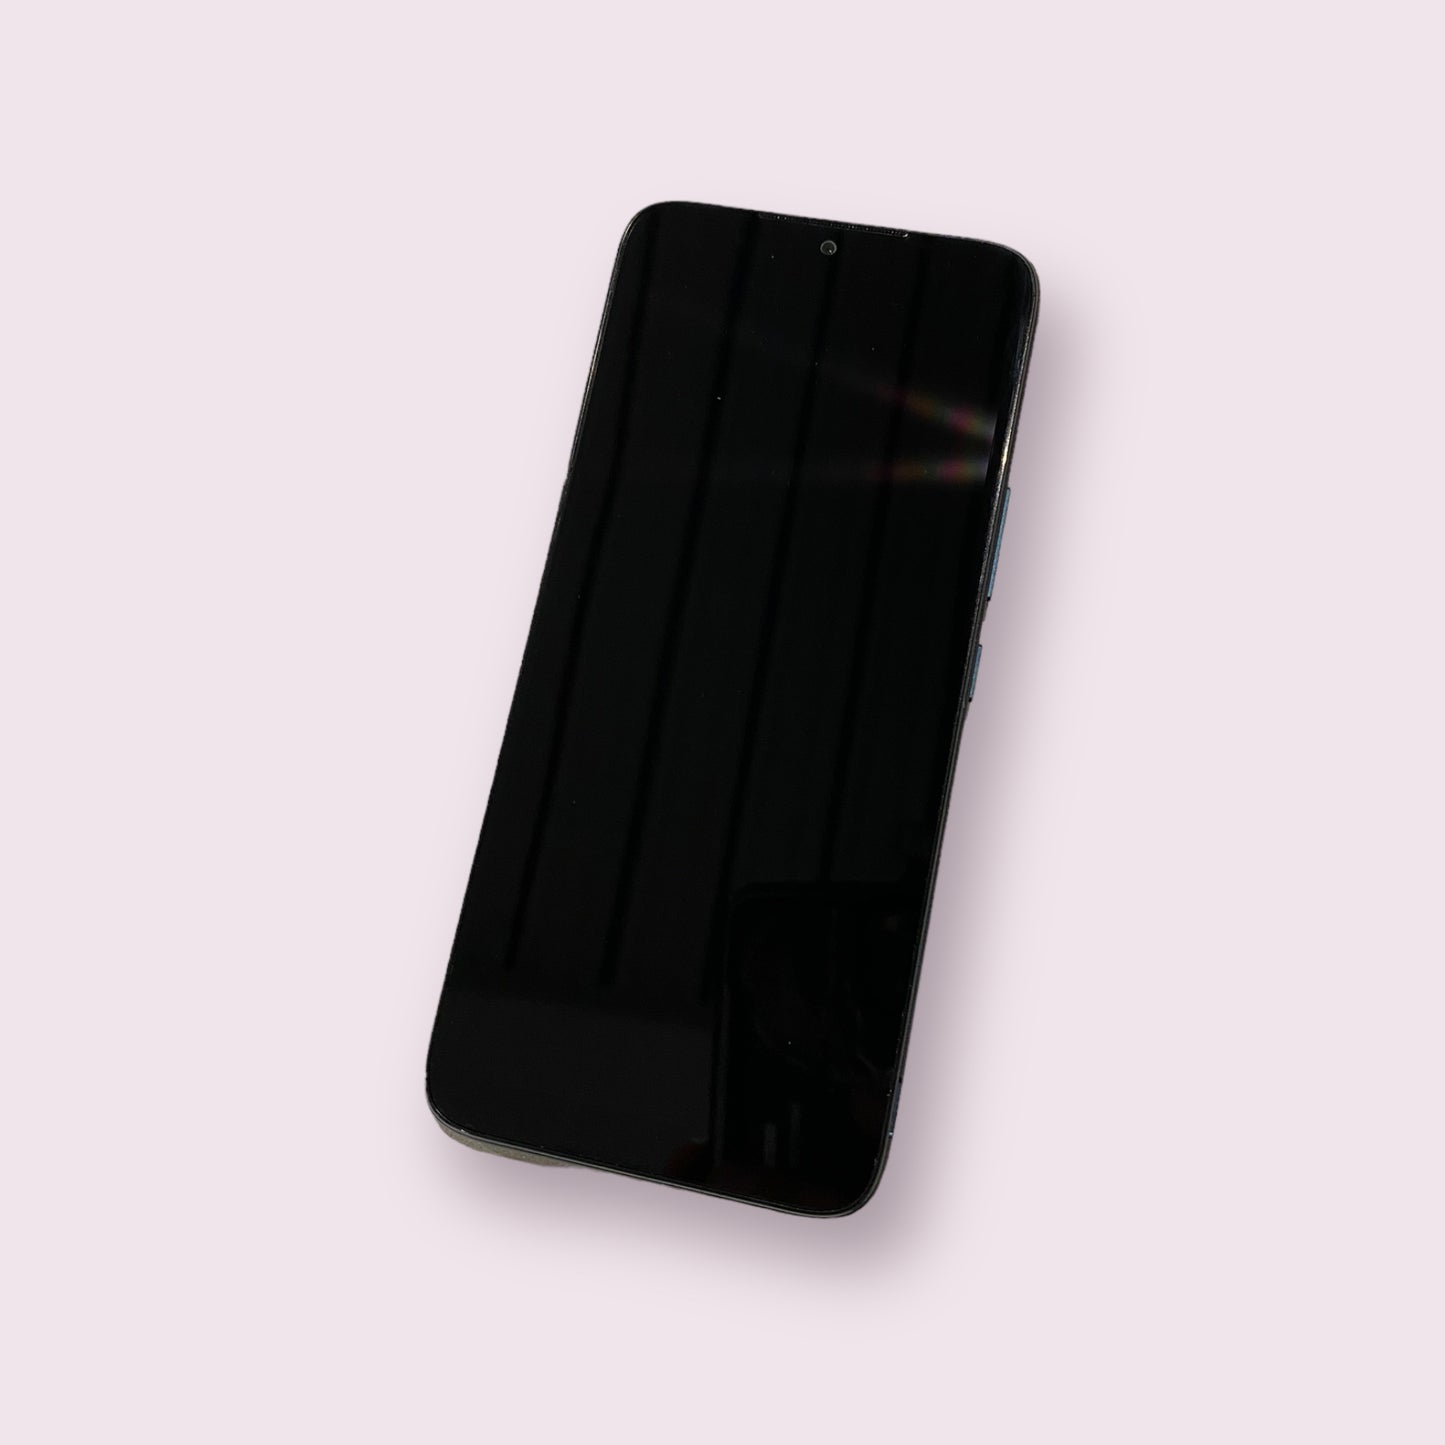 Nokia C12 64GB Dark Cyan Android Smartphone - Unlocked - Grade A